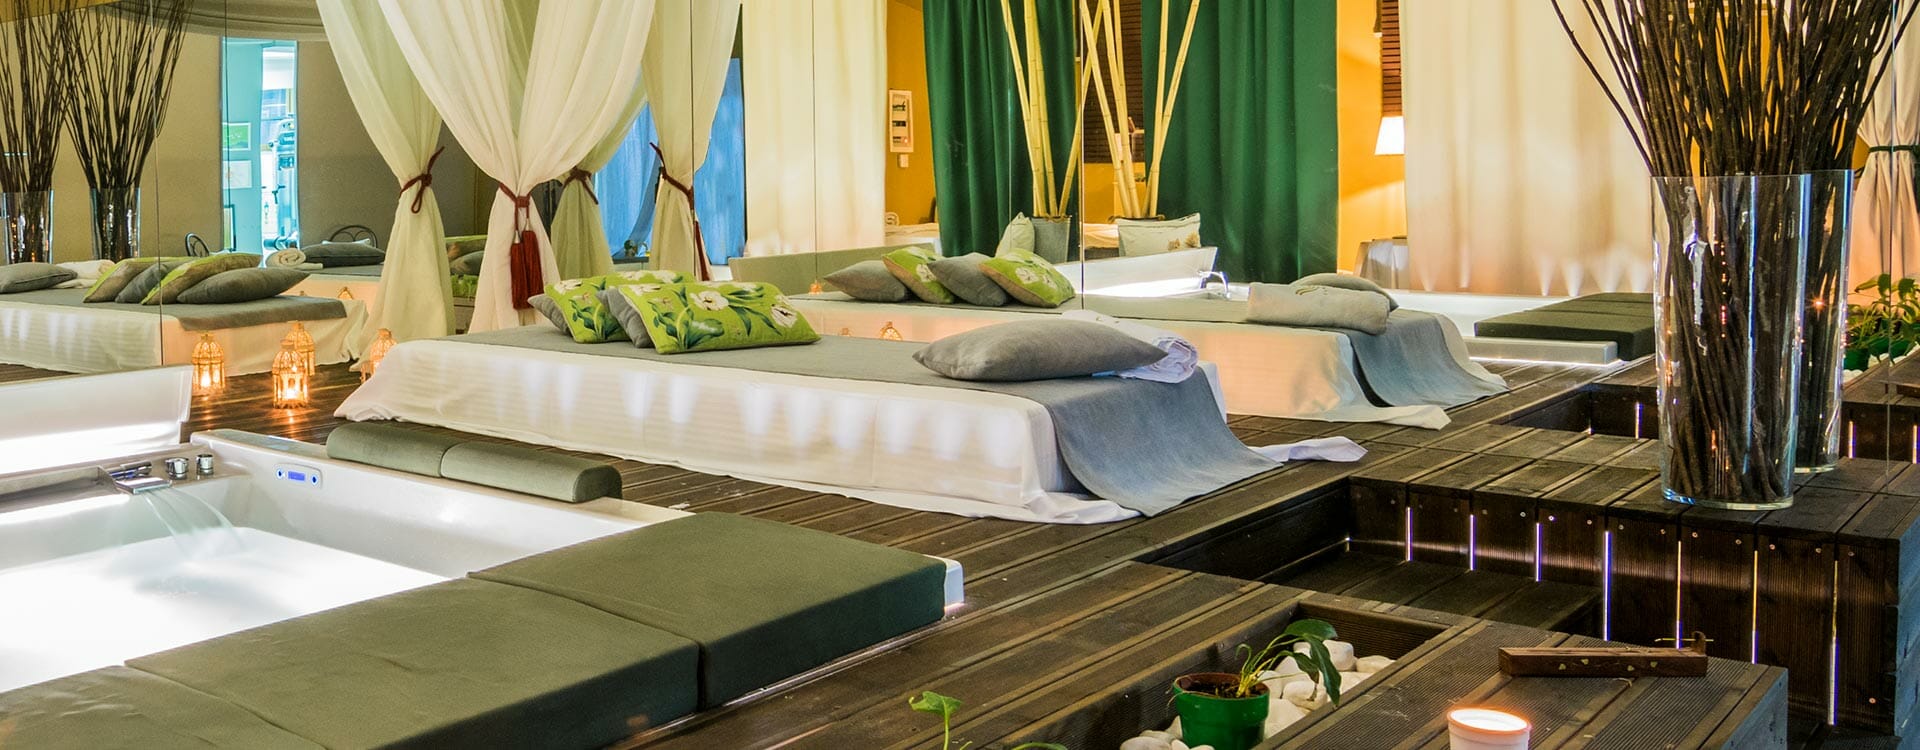 Hotel Golden Suites And Spa - Θεραπείες Spa στα Ιωάννινα - slide3